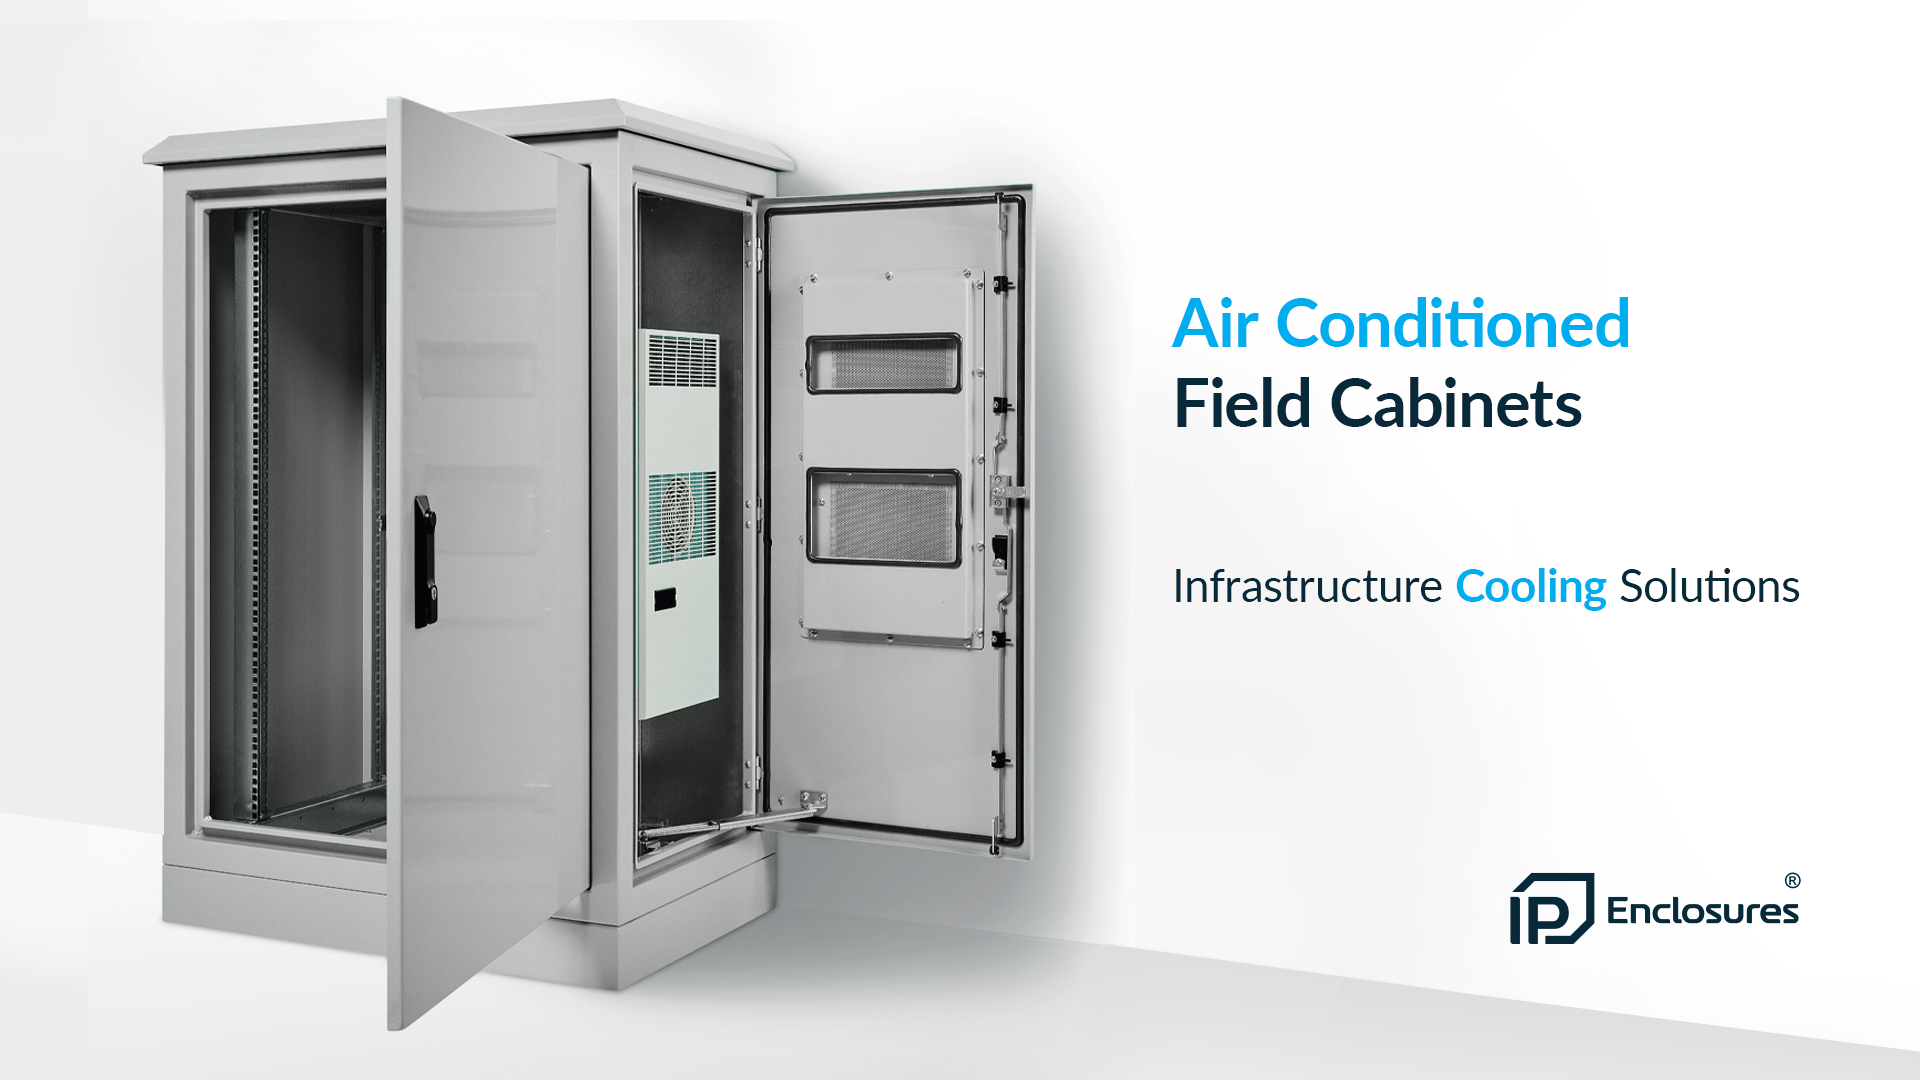 Field Cabinets